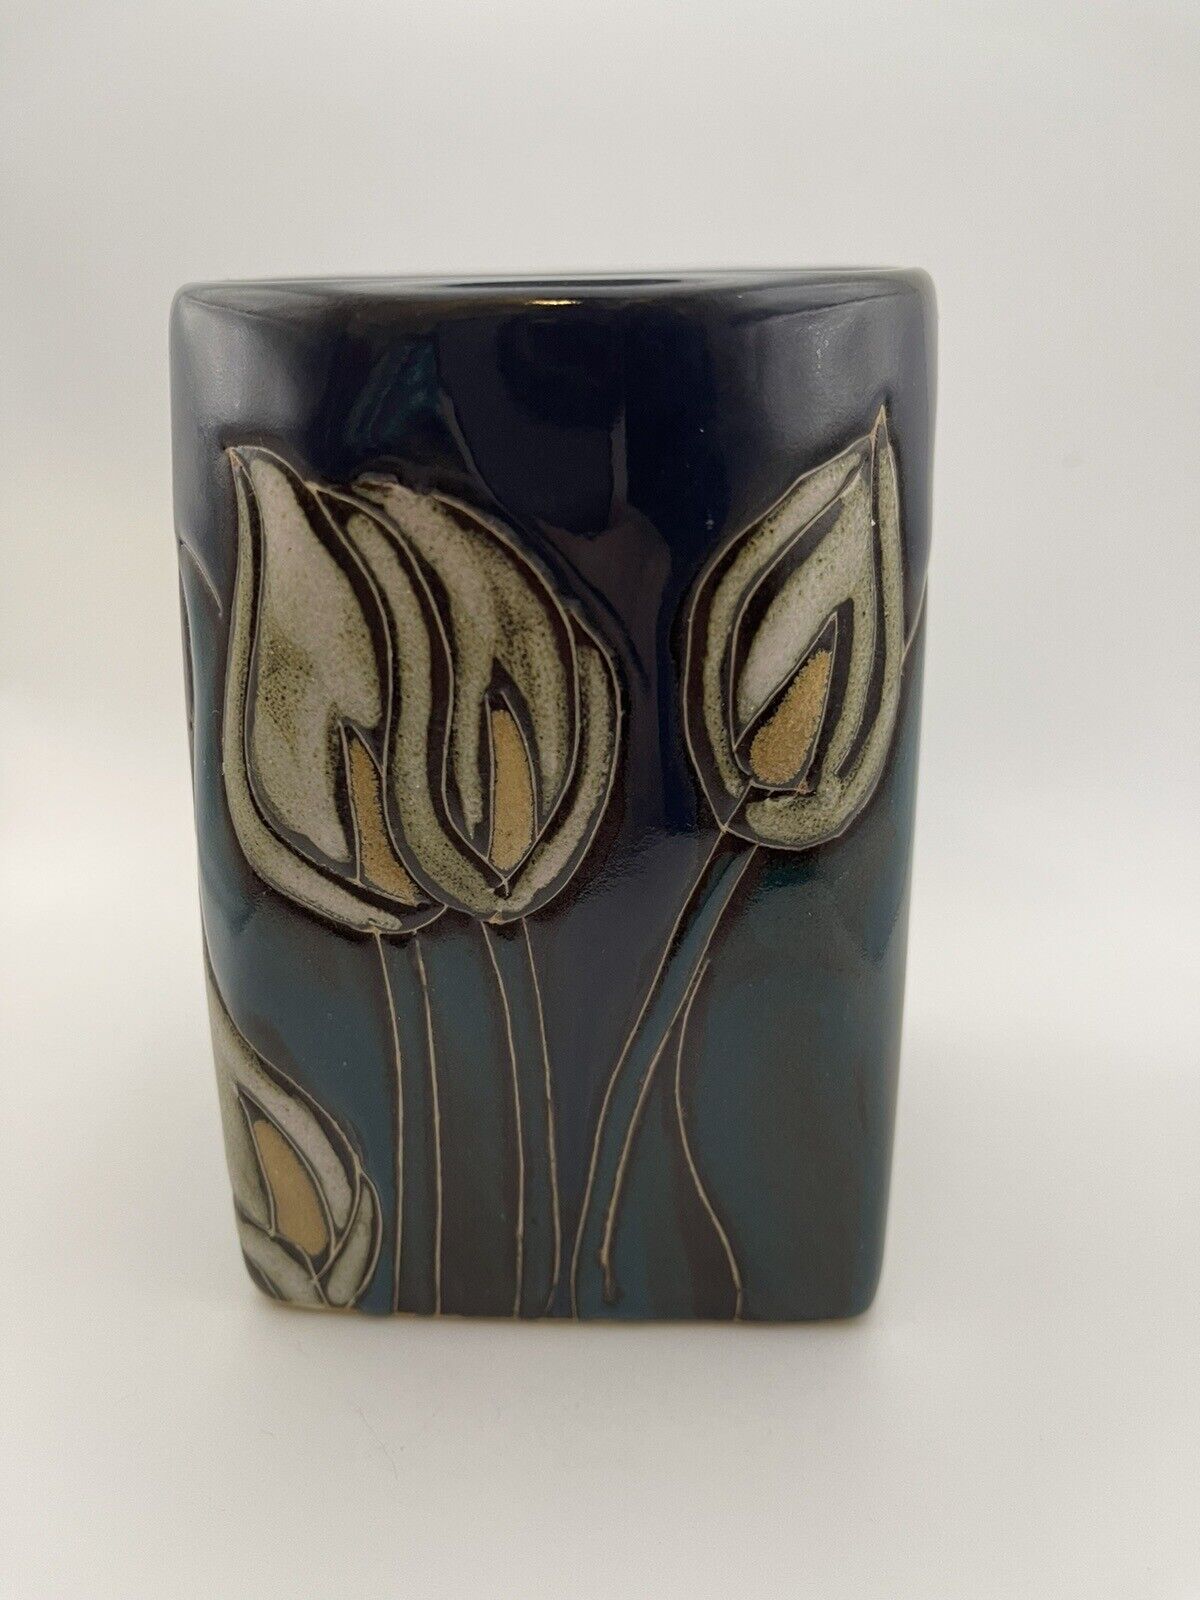 Designed Mara Mexico Studio Art Pottery Calla Lily Flower Cup Coffee Mug Signed